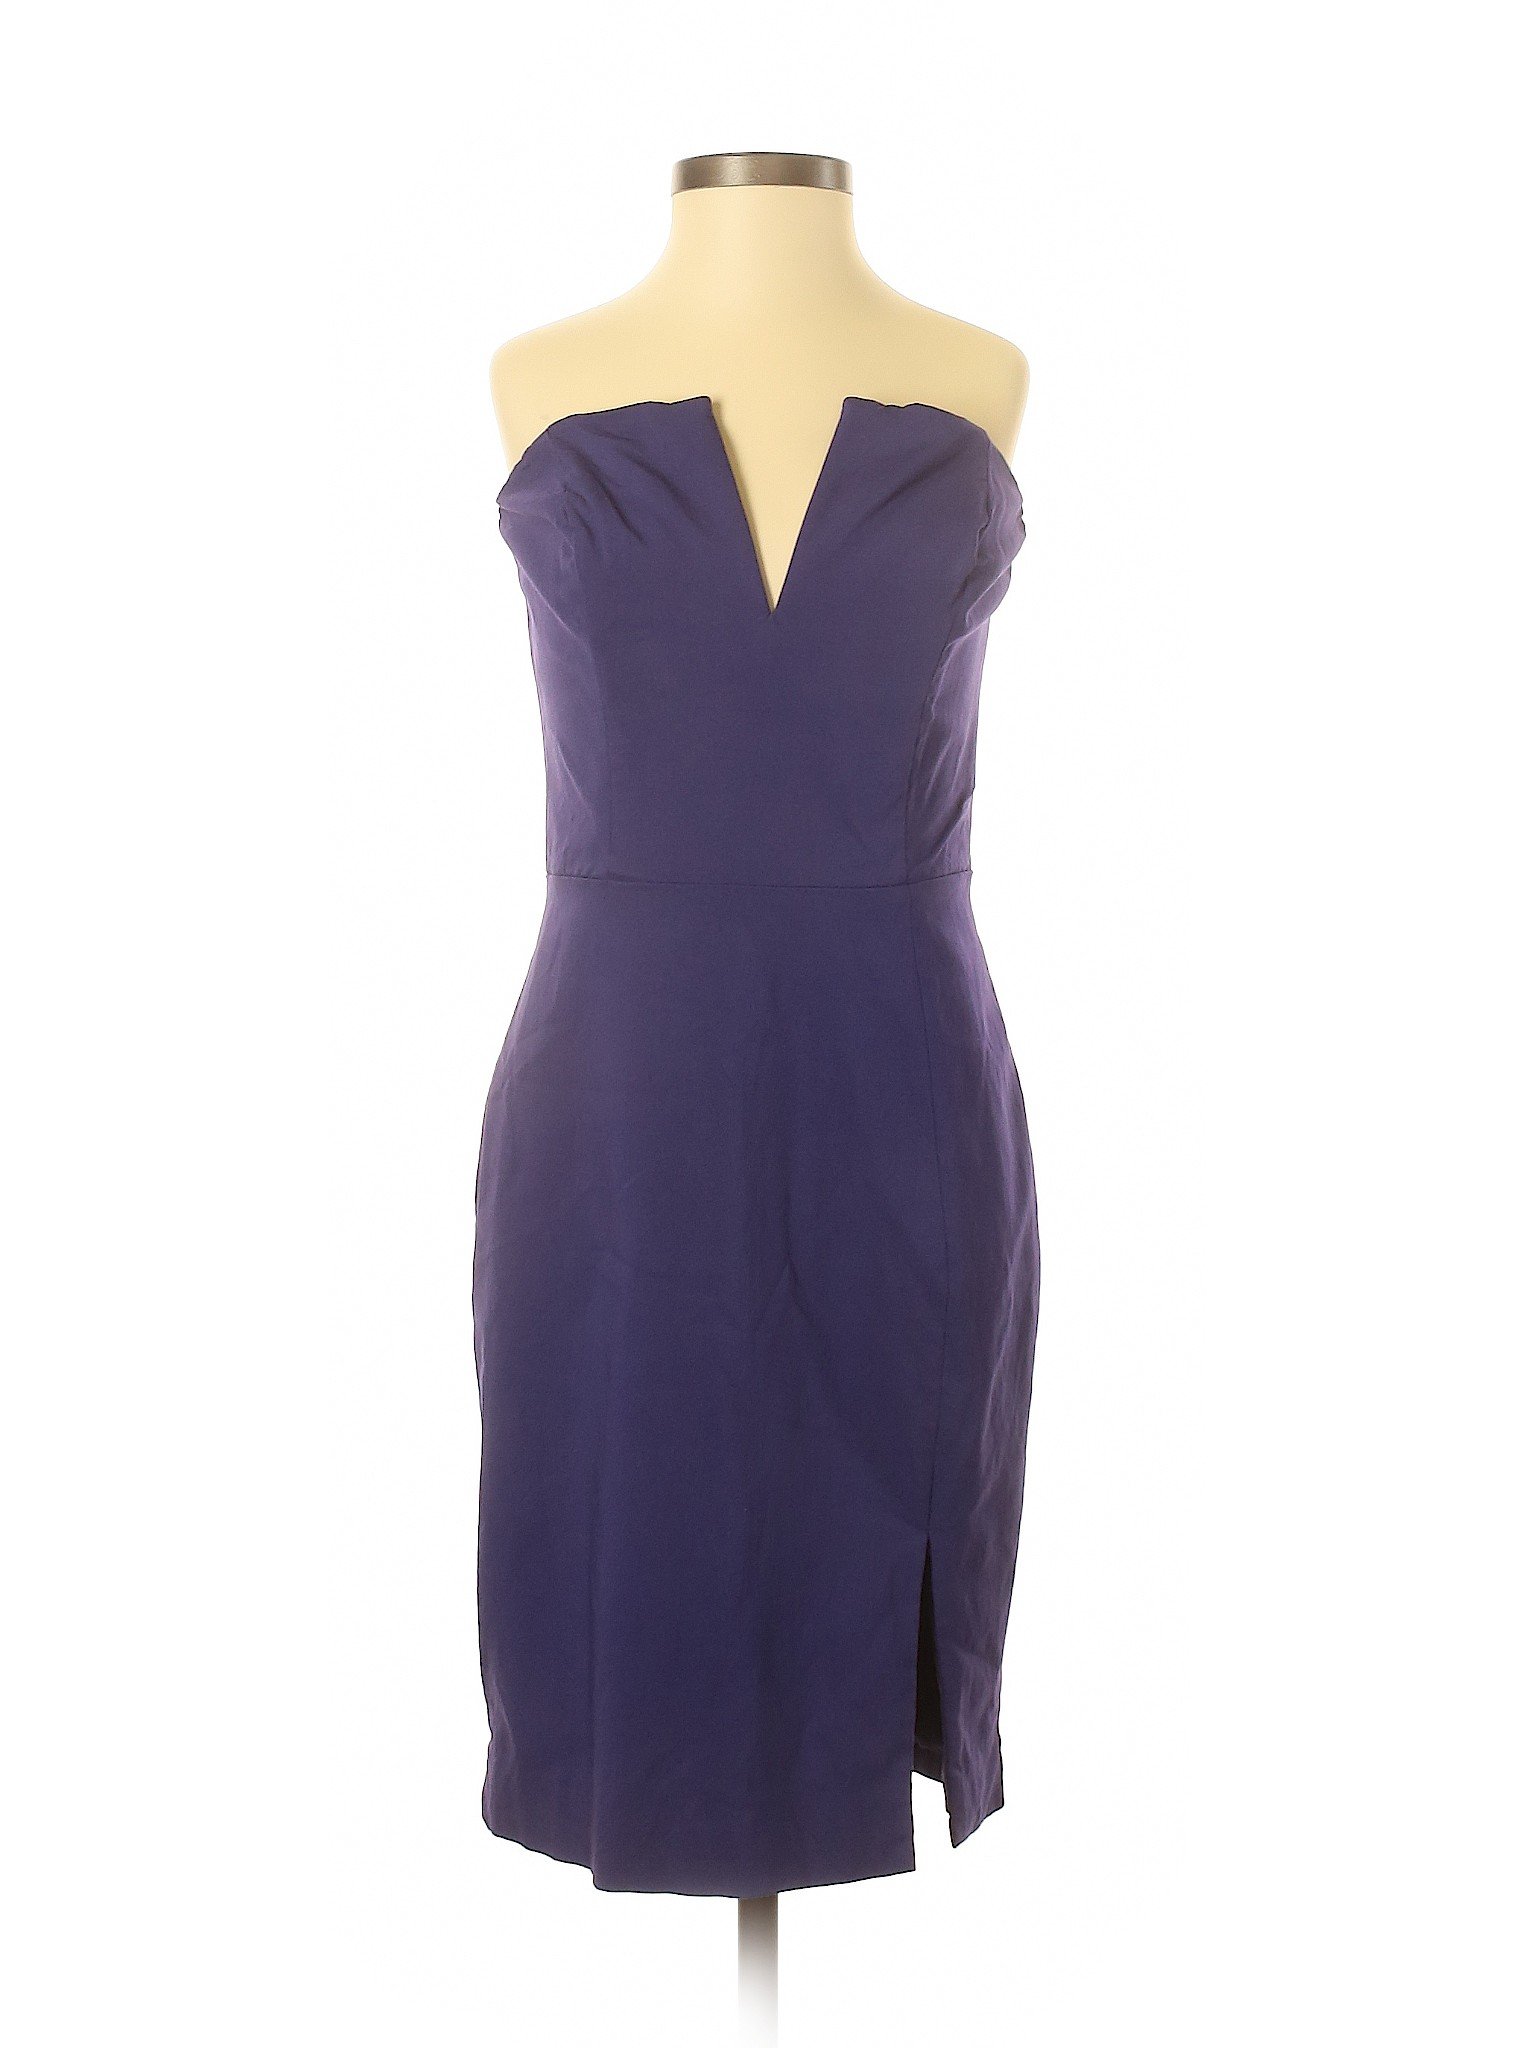 Guess Women Purple Cocktail Dress 6 | eBay